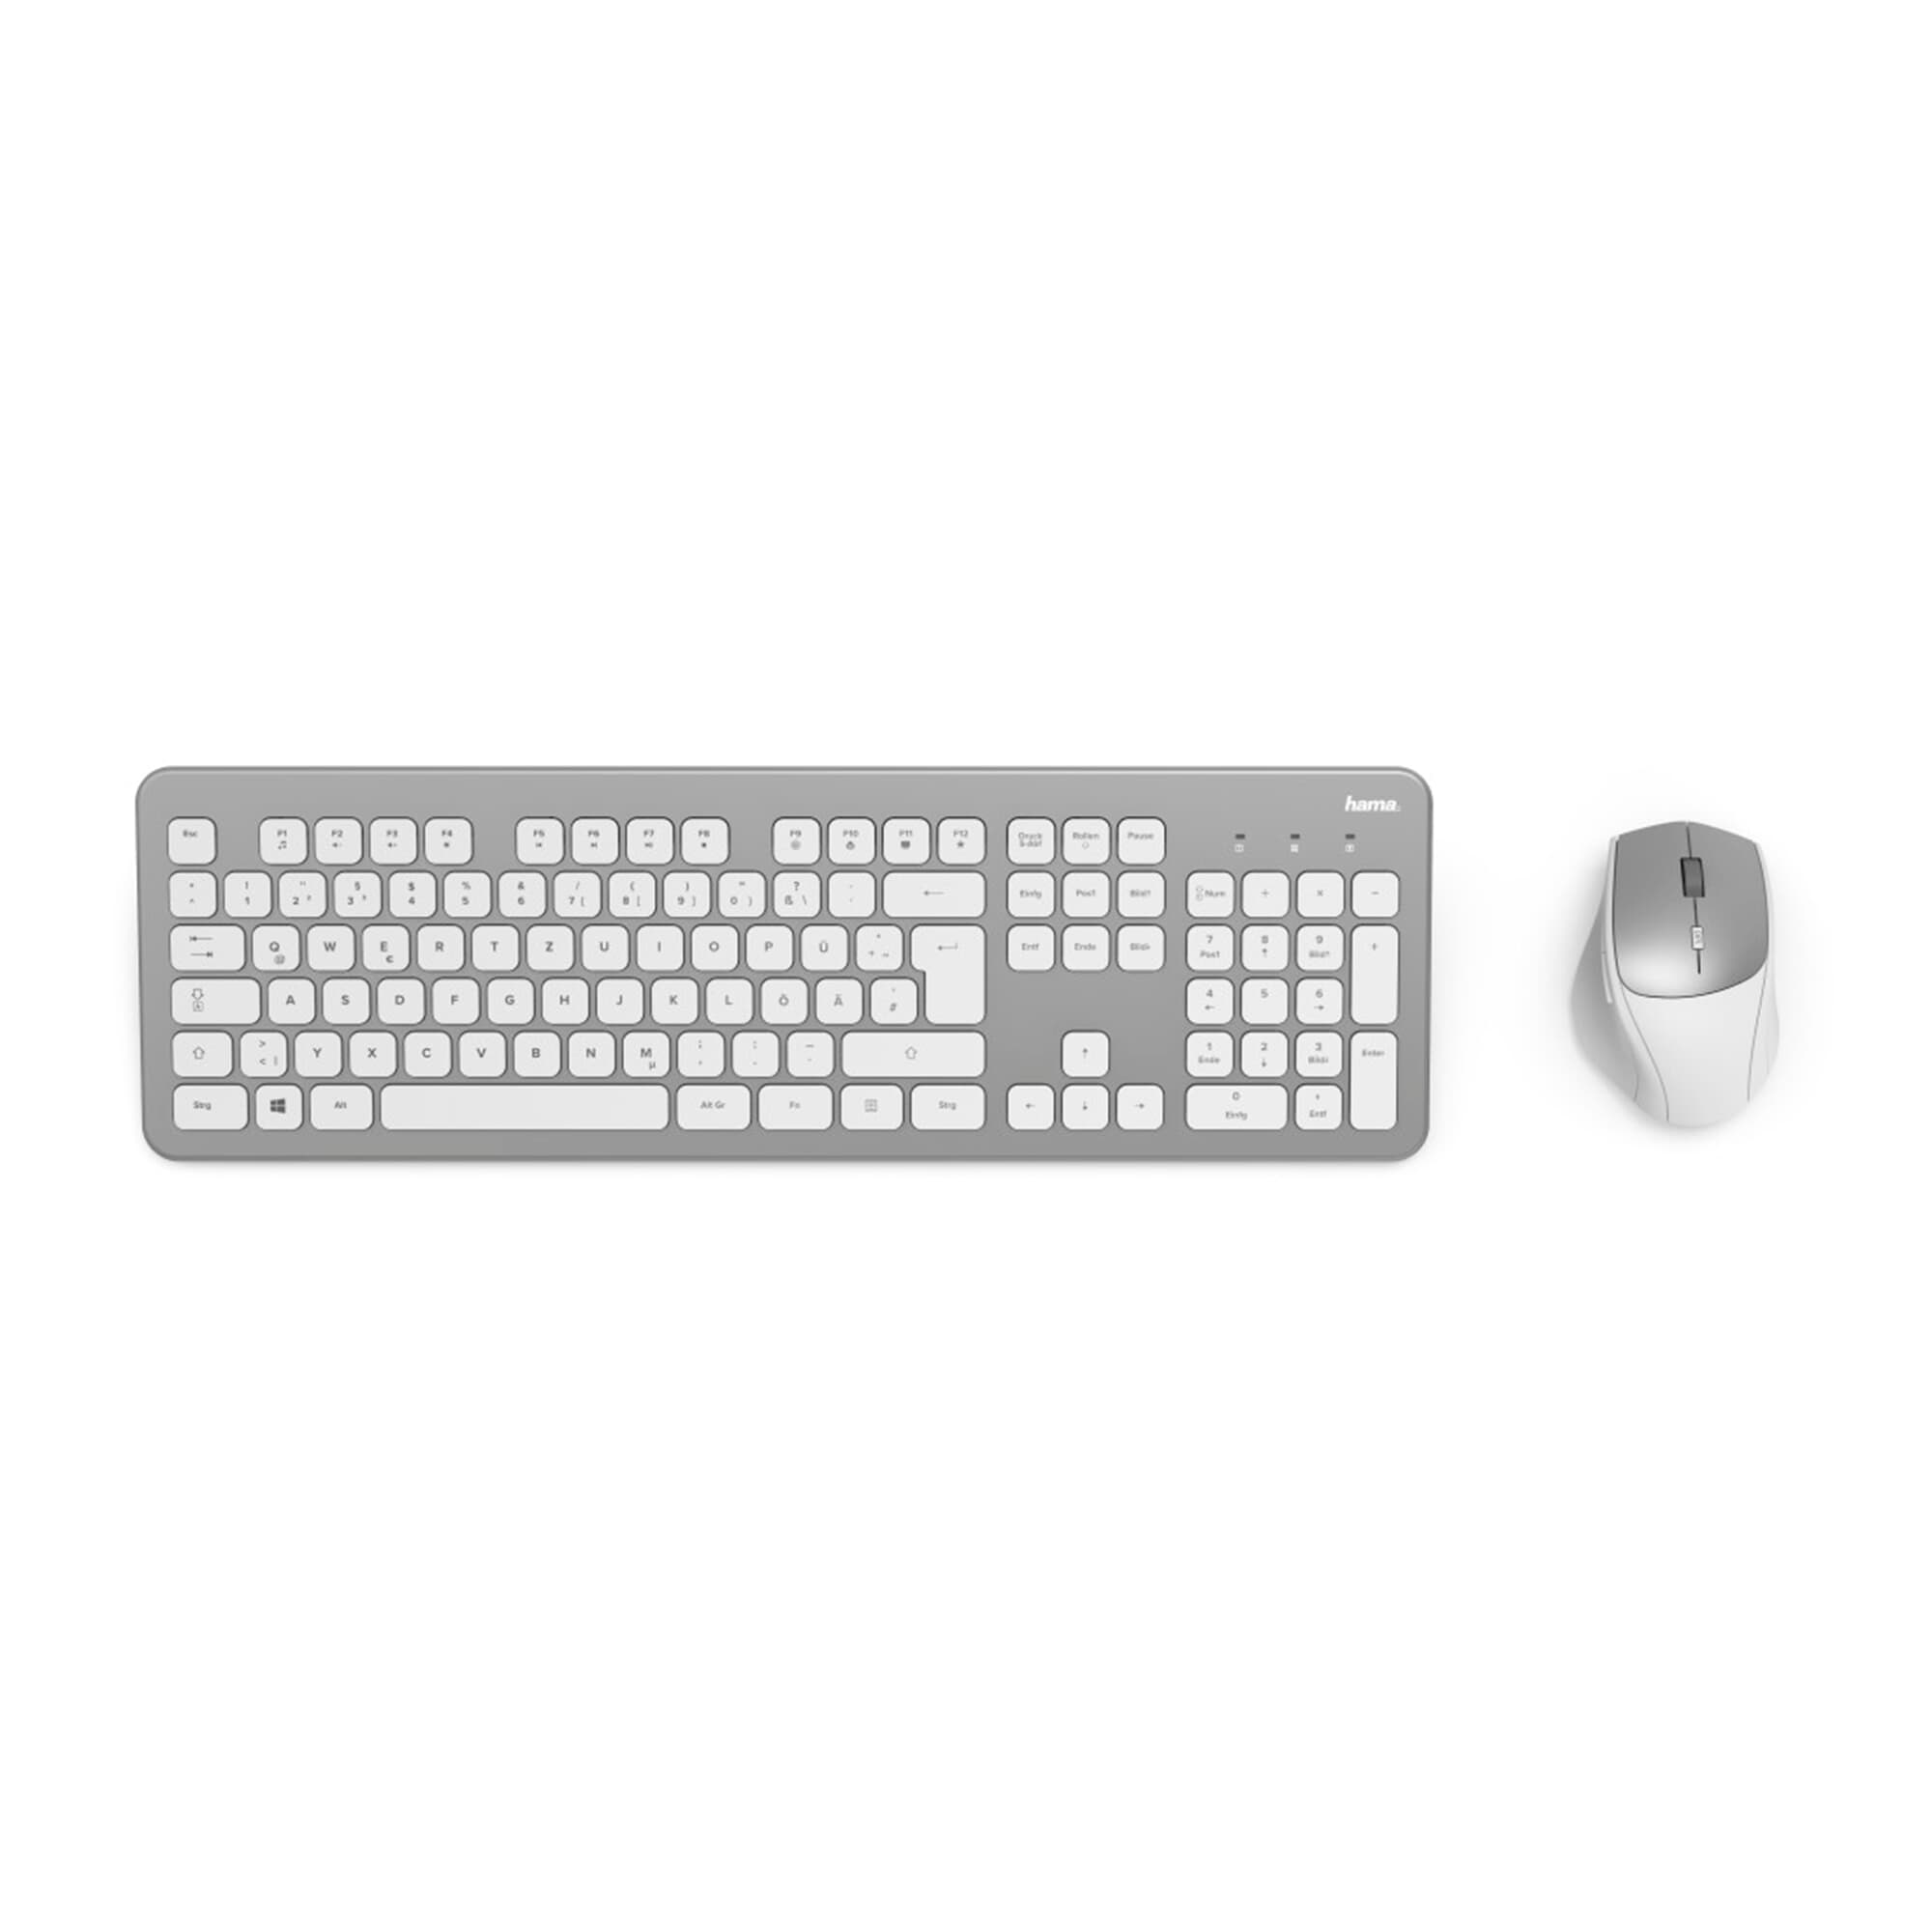 Silber/Weiß HAMA Tastatur/Maus KMW-700, Set,